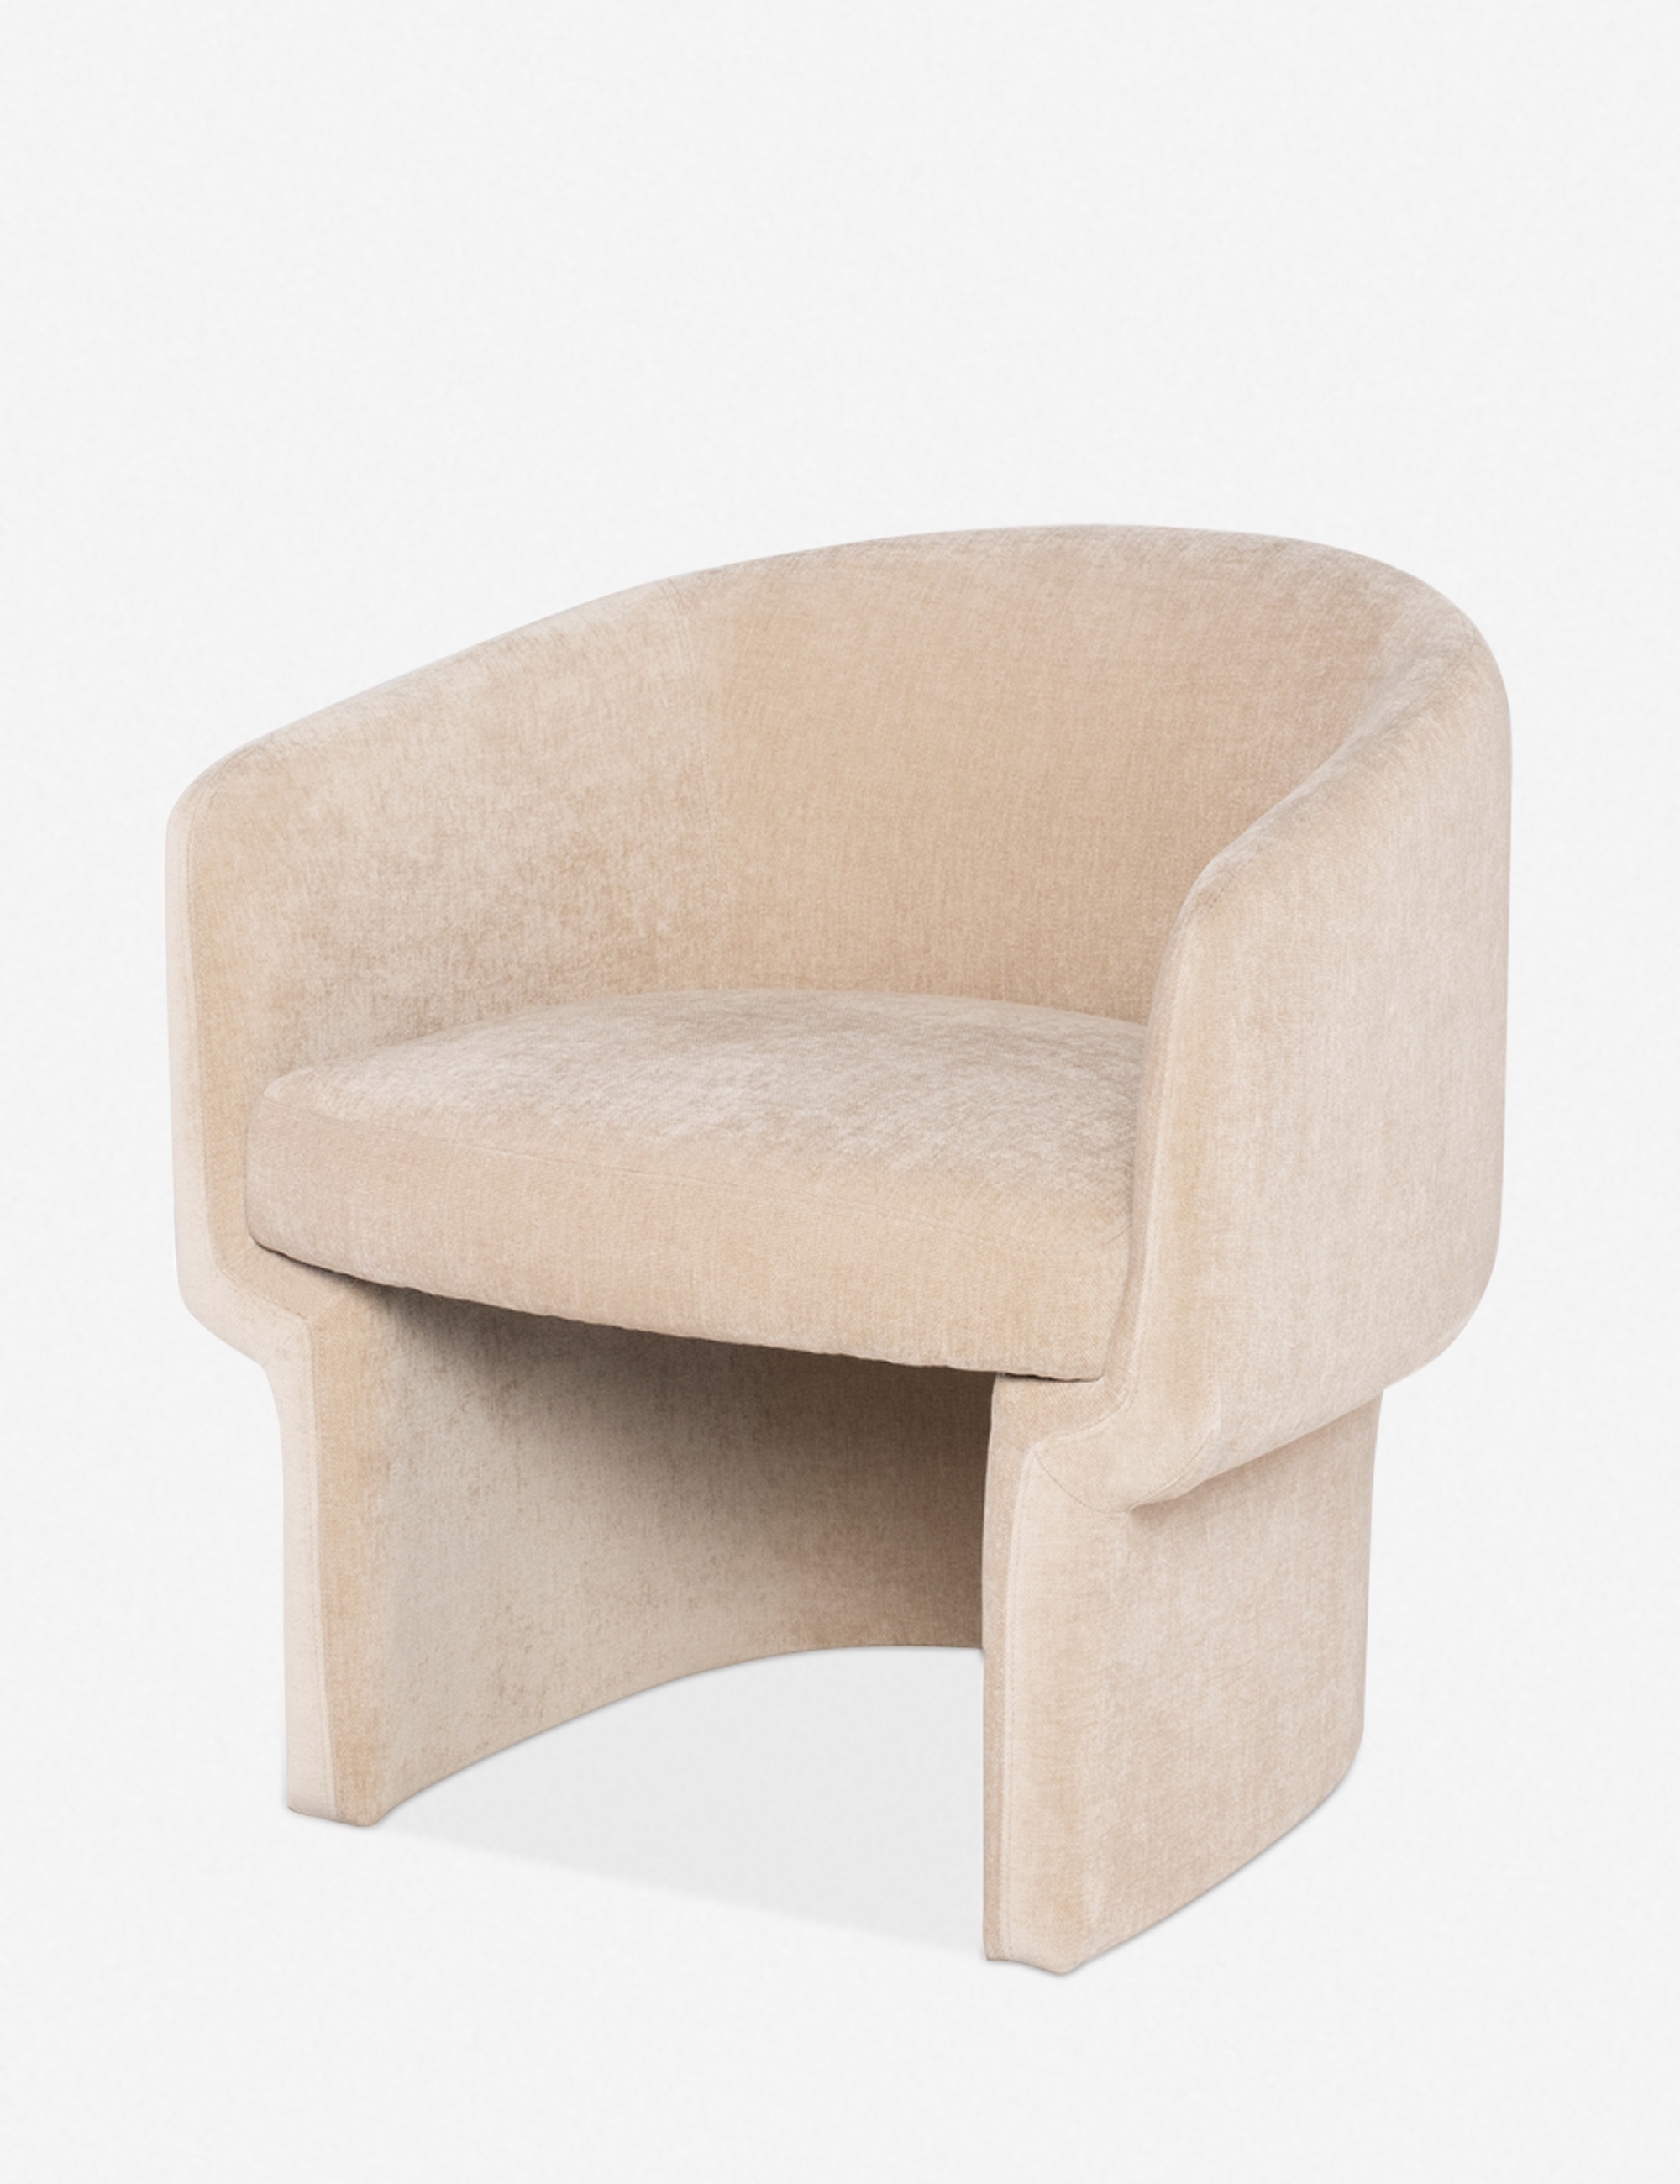 Pomona Occasional Chair, Almond - Image 1